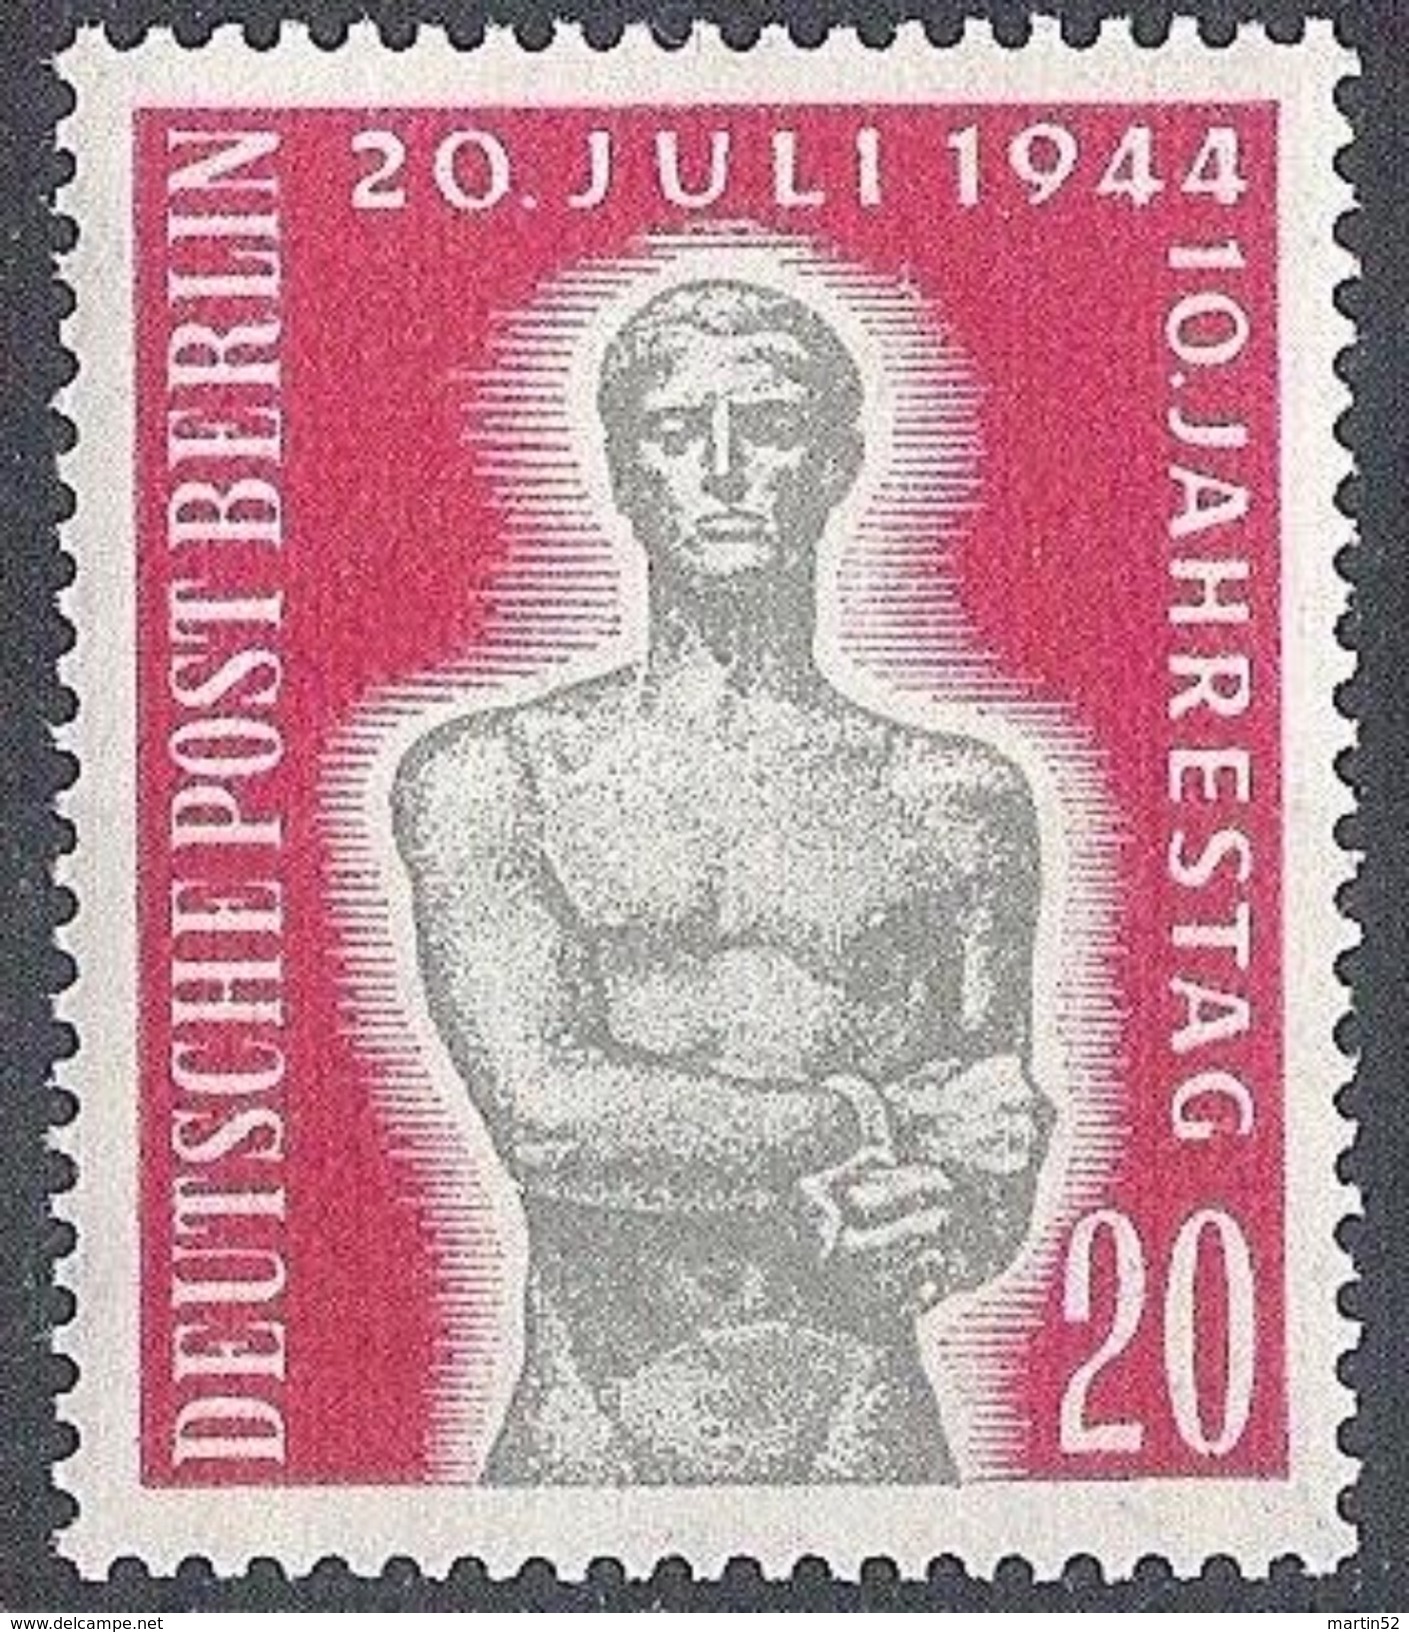 Berlin 1954: "20 JULI 1944" (Denkmal) Michel-Nr. 119 ** Postfrisch MNH (Michel 6.50 Euro) - Monumenti